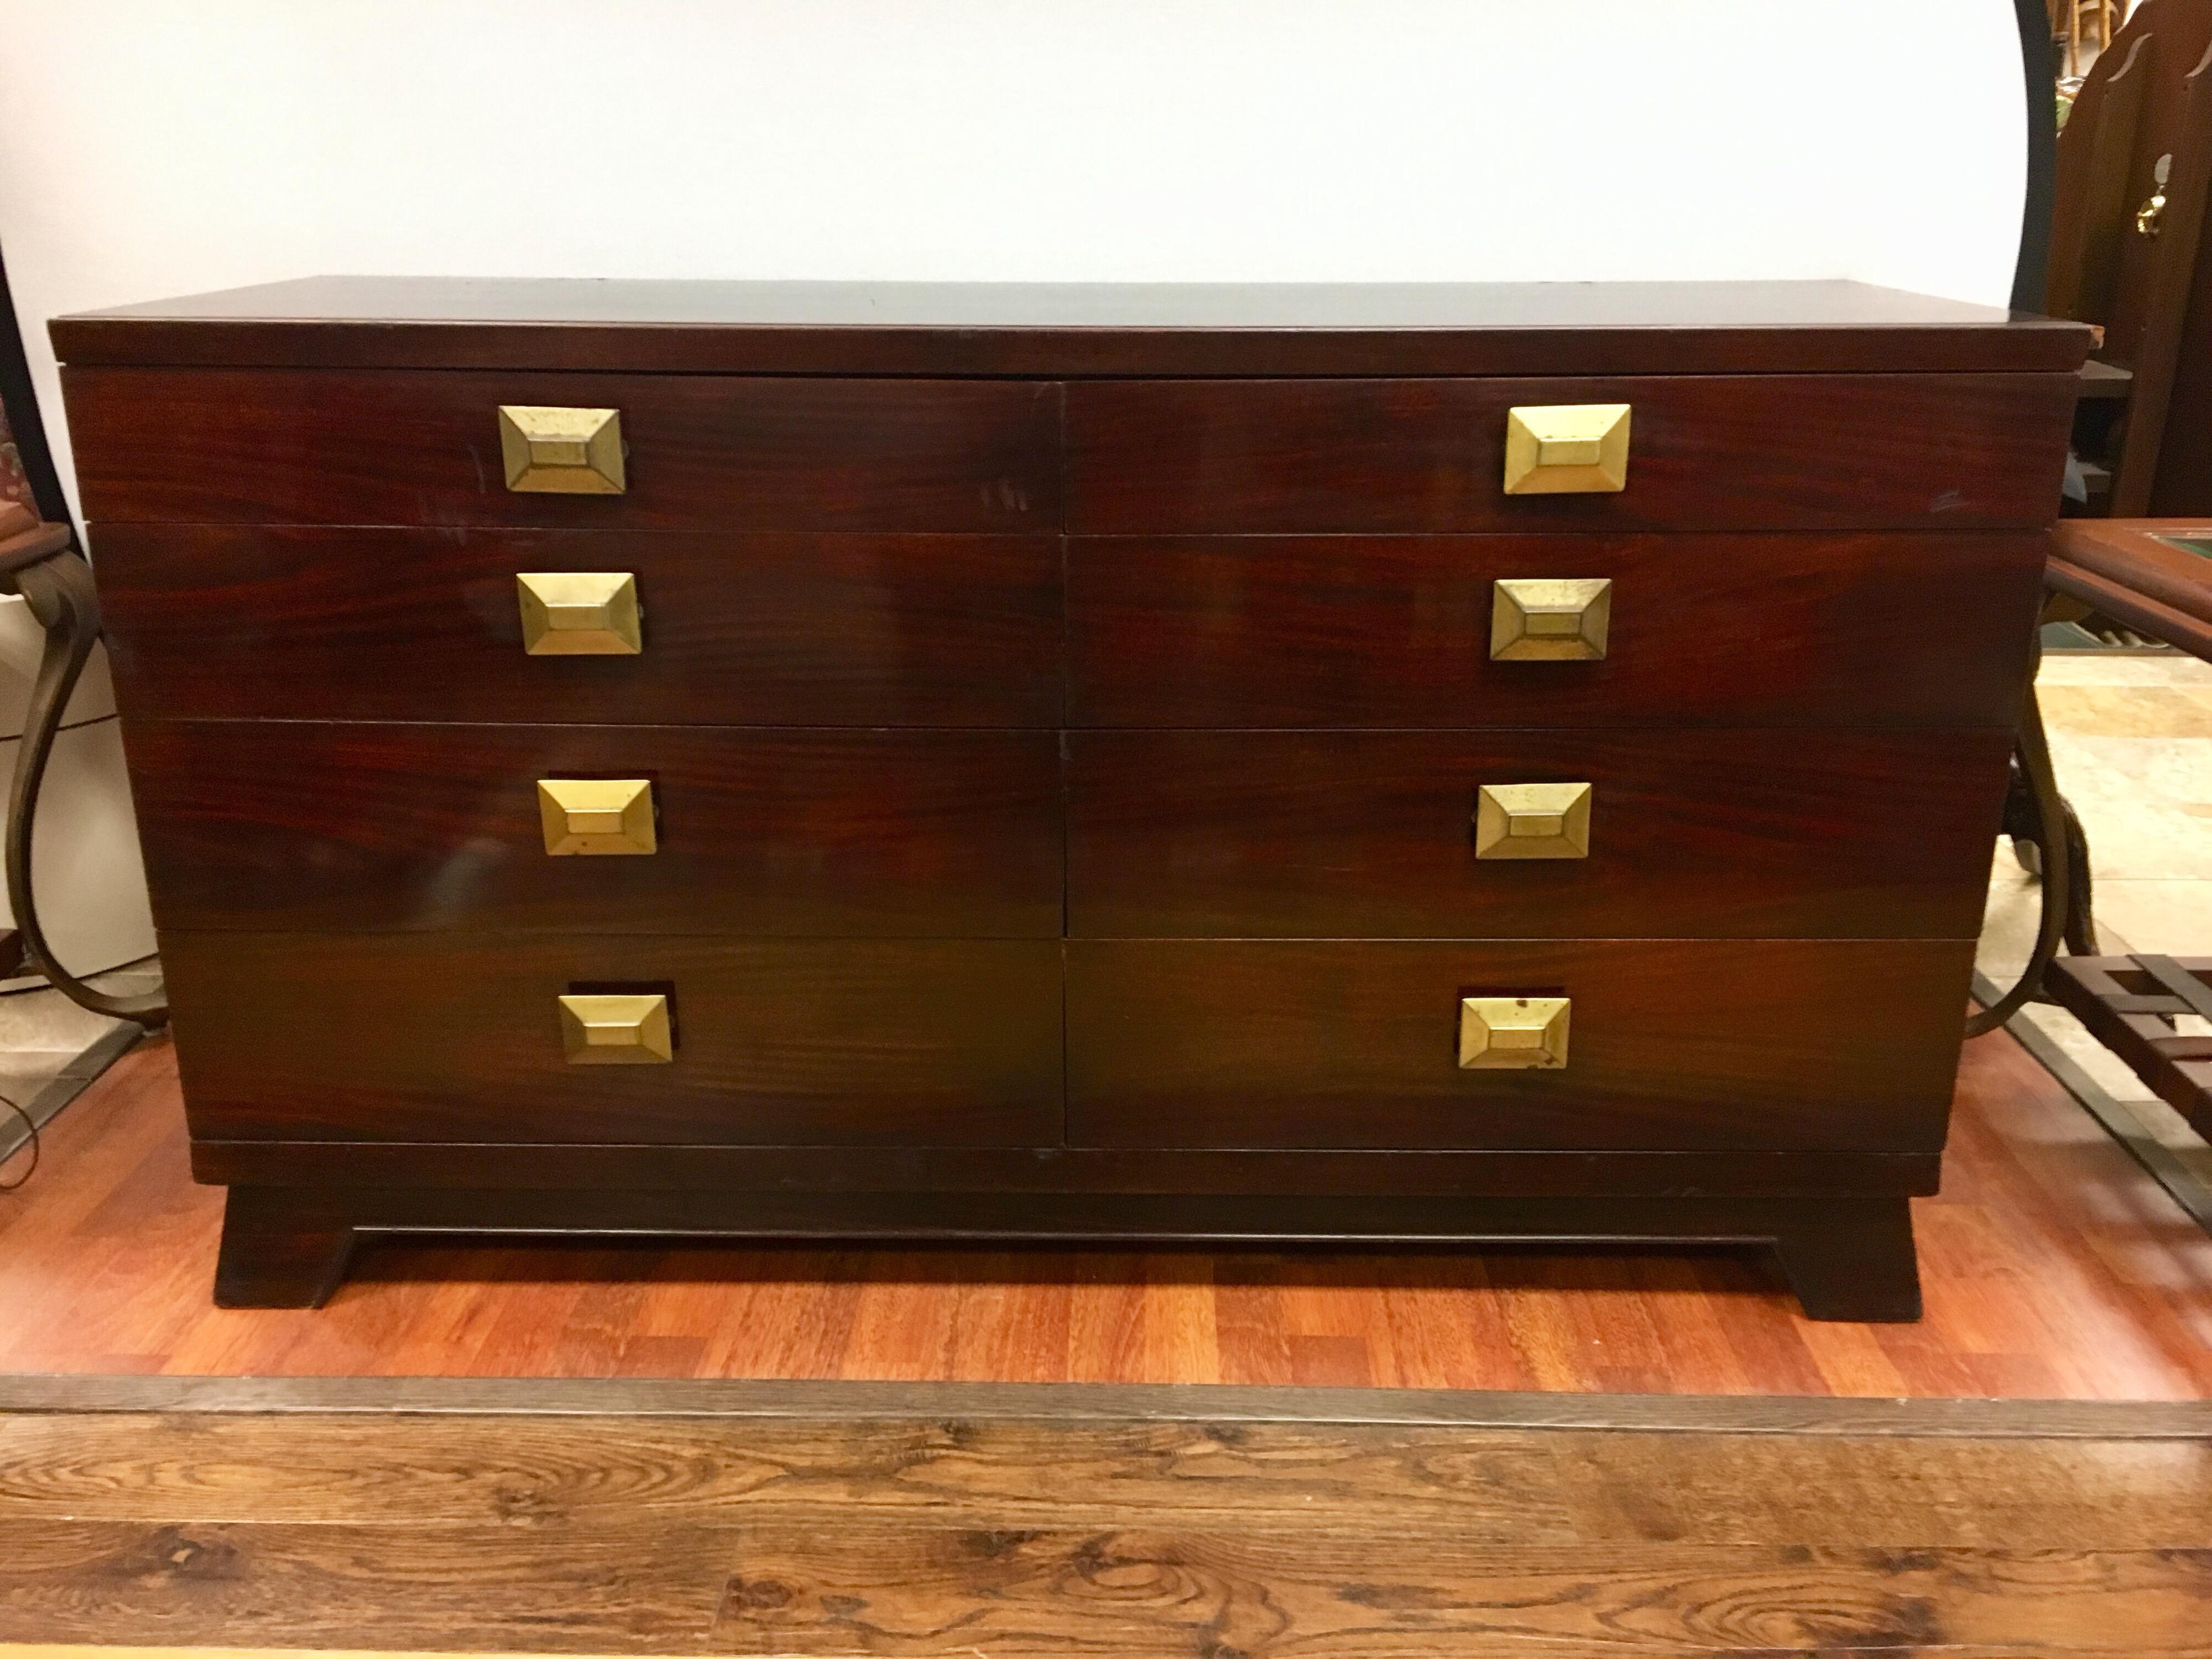 Cavalier Furniture eight-drawer dresser with large architectural brass pulls.